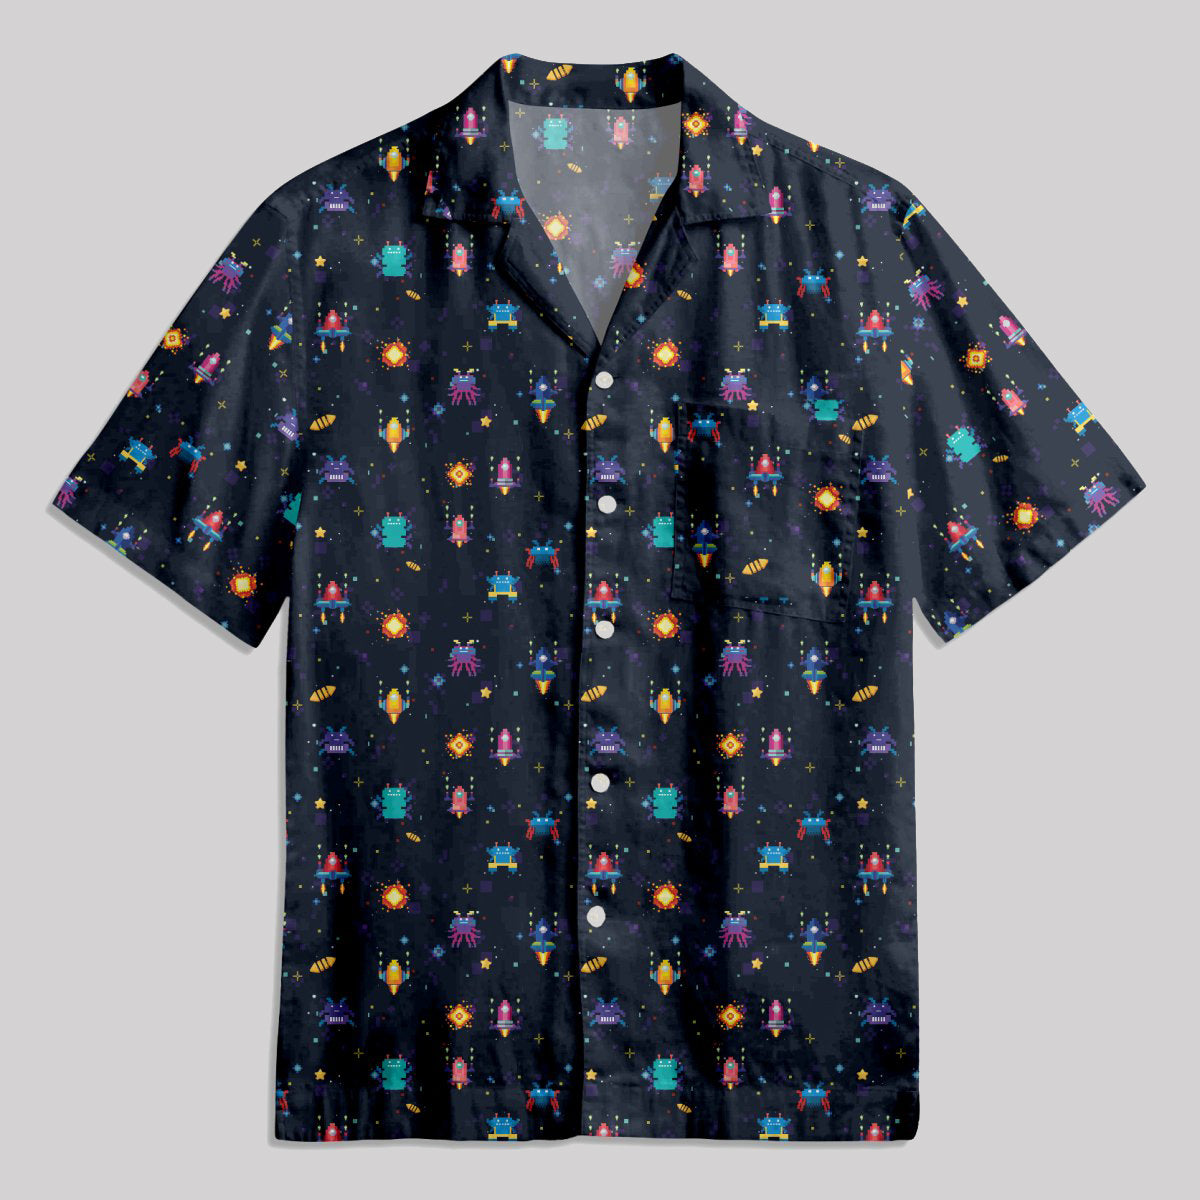 Pixel Style Retro Game Button Up Pocket Shirt